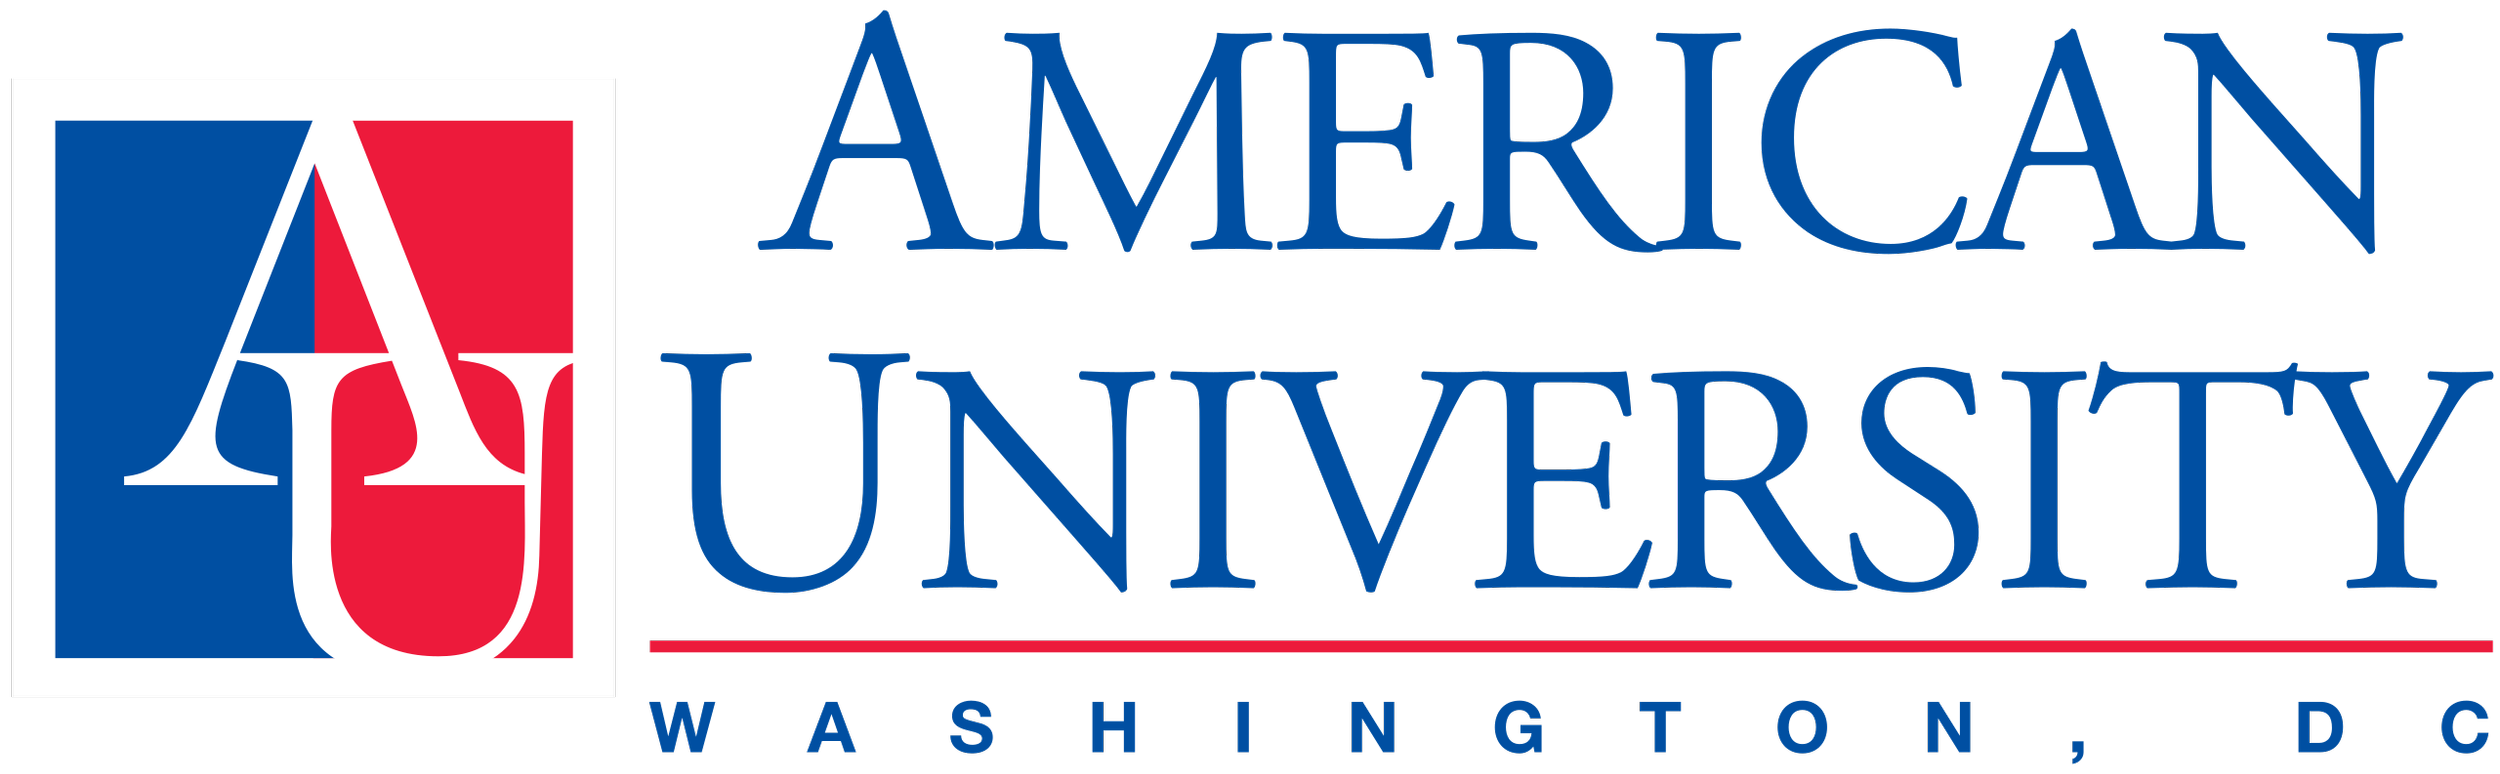 American_University_logo.svg.png